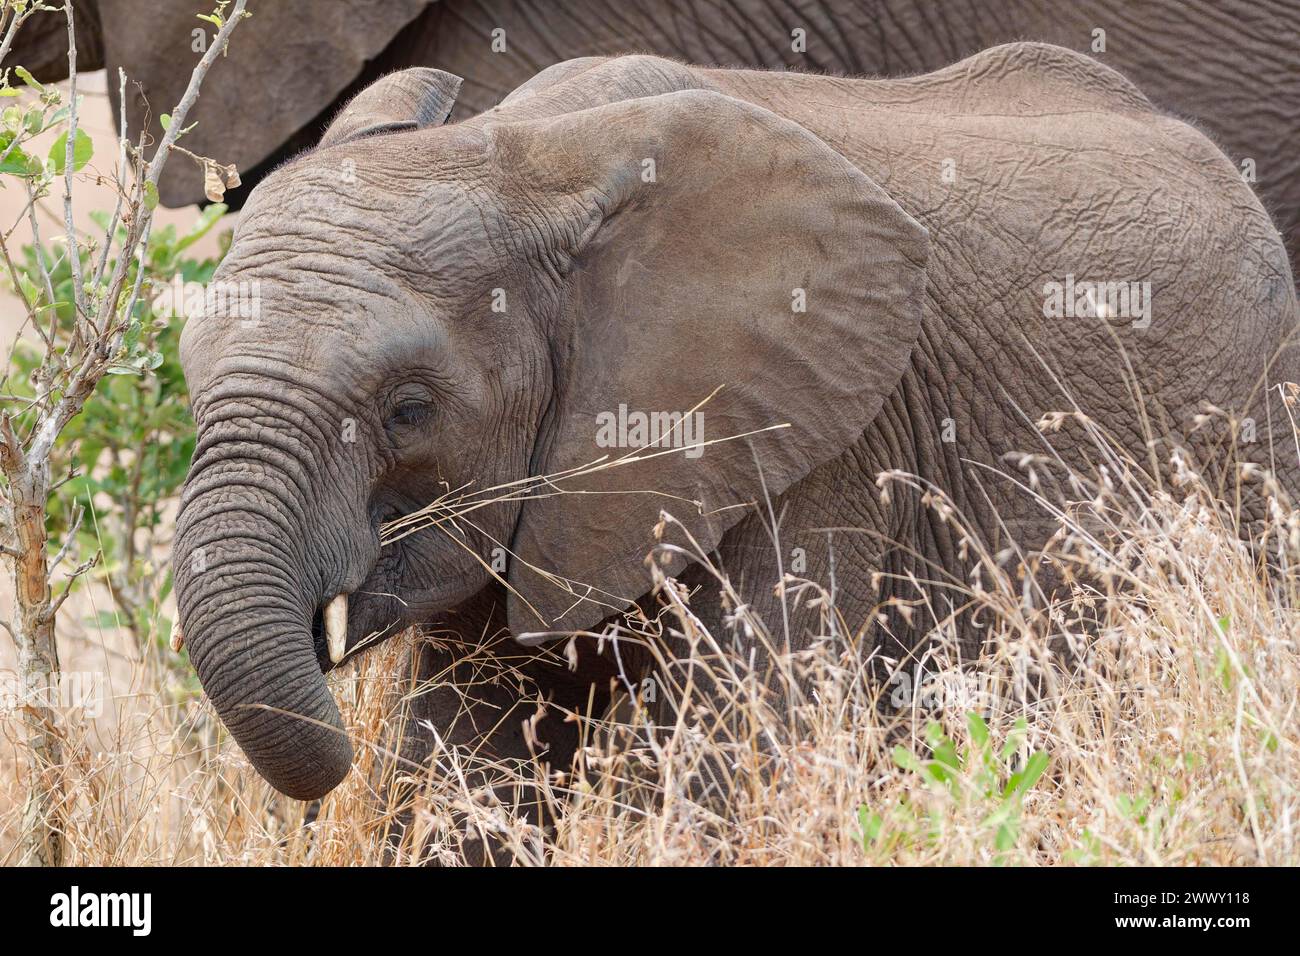 Afrikanische Buschelefanten (Loxodonta africana), Elefantenkälber, die auf trockenem Gras fressen, Nahaufnahme des Kopfes, Kruger-Nationalpark, Südafrika, Afrika Stockfoto